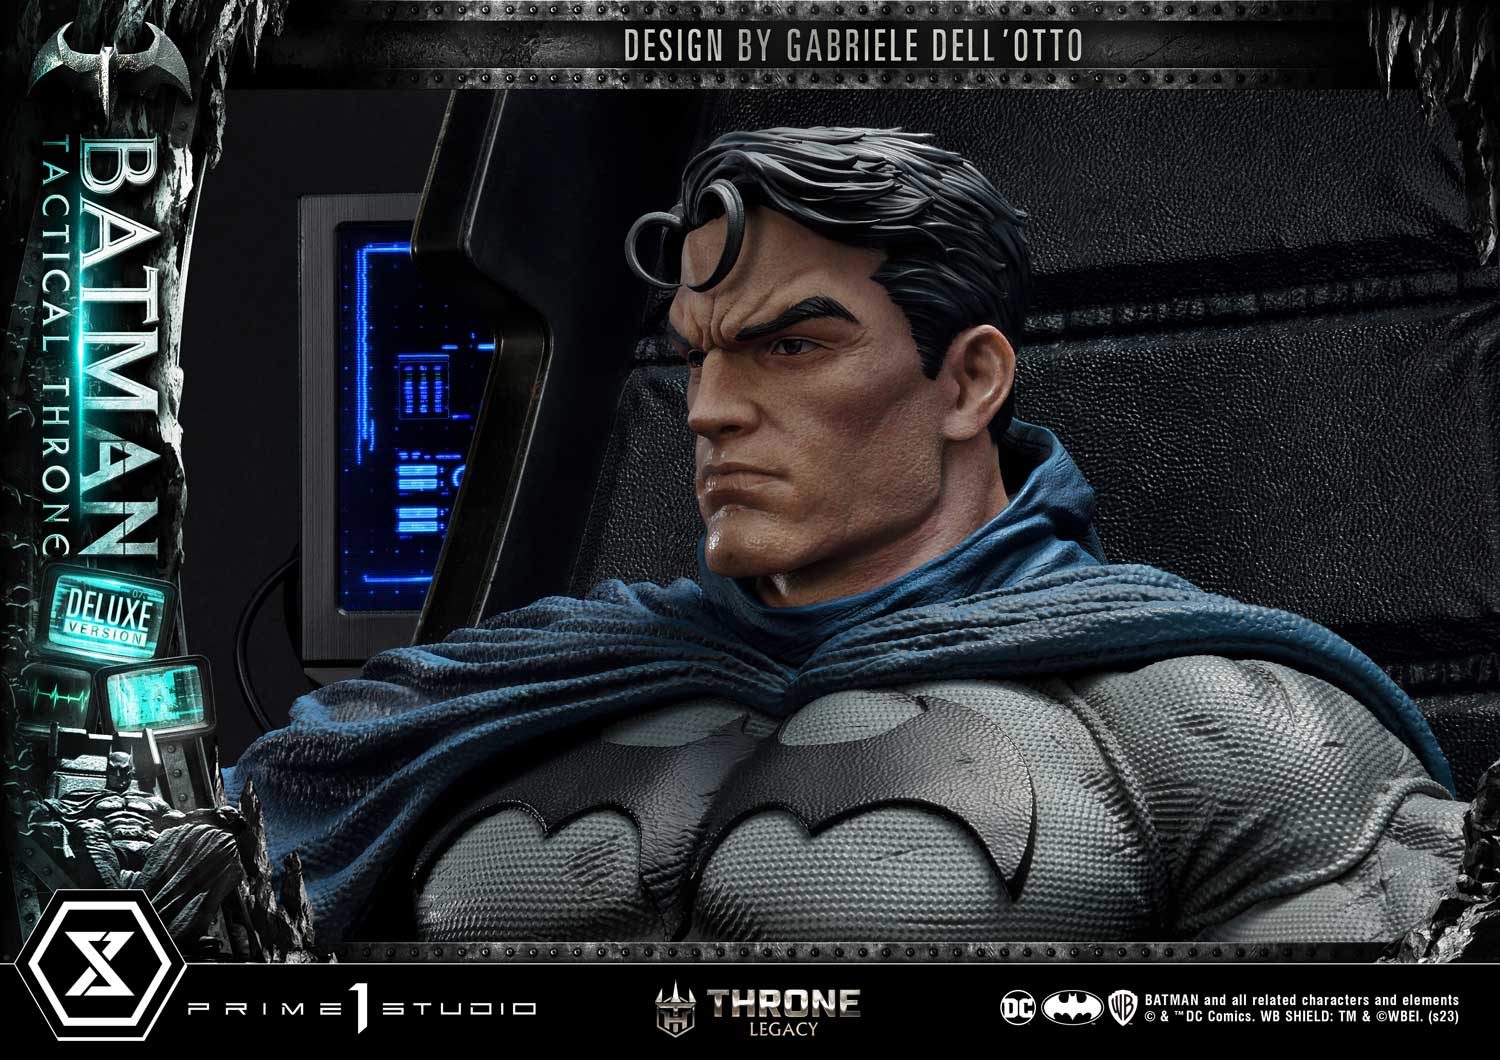 Statue Batman Tactical Throne Economy Version Throne Legacy Collection  Prime 1 Studio DC Comics